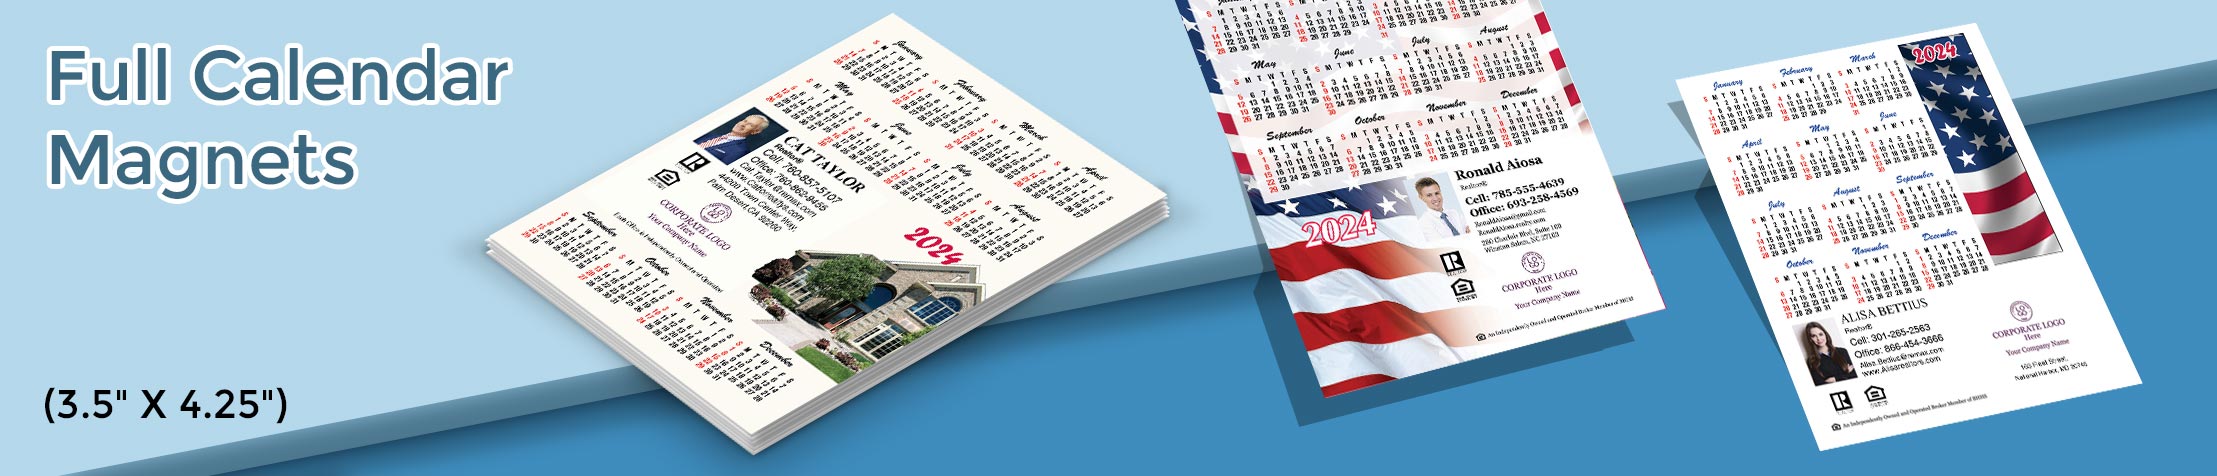 Berkshire Hathaway Real Estate Full Calendar Magnets - Berkshire Hathaway 2019 calendars, 3.5” by 4.25” | BestPrintBuy.com